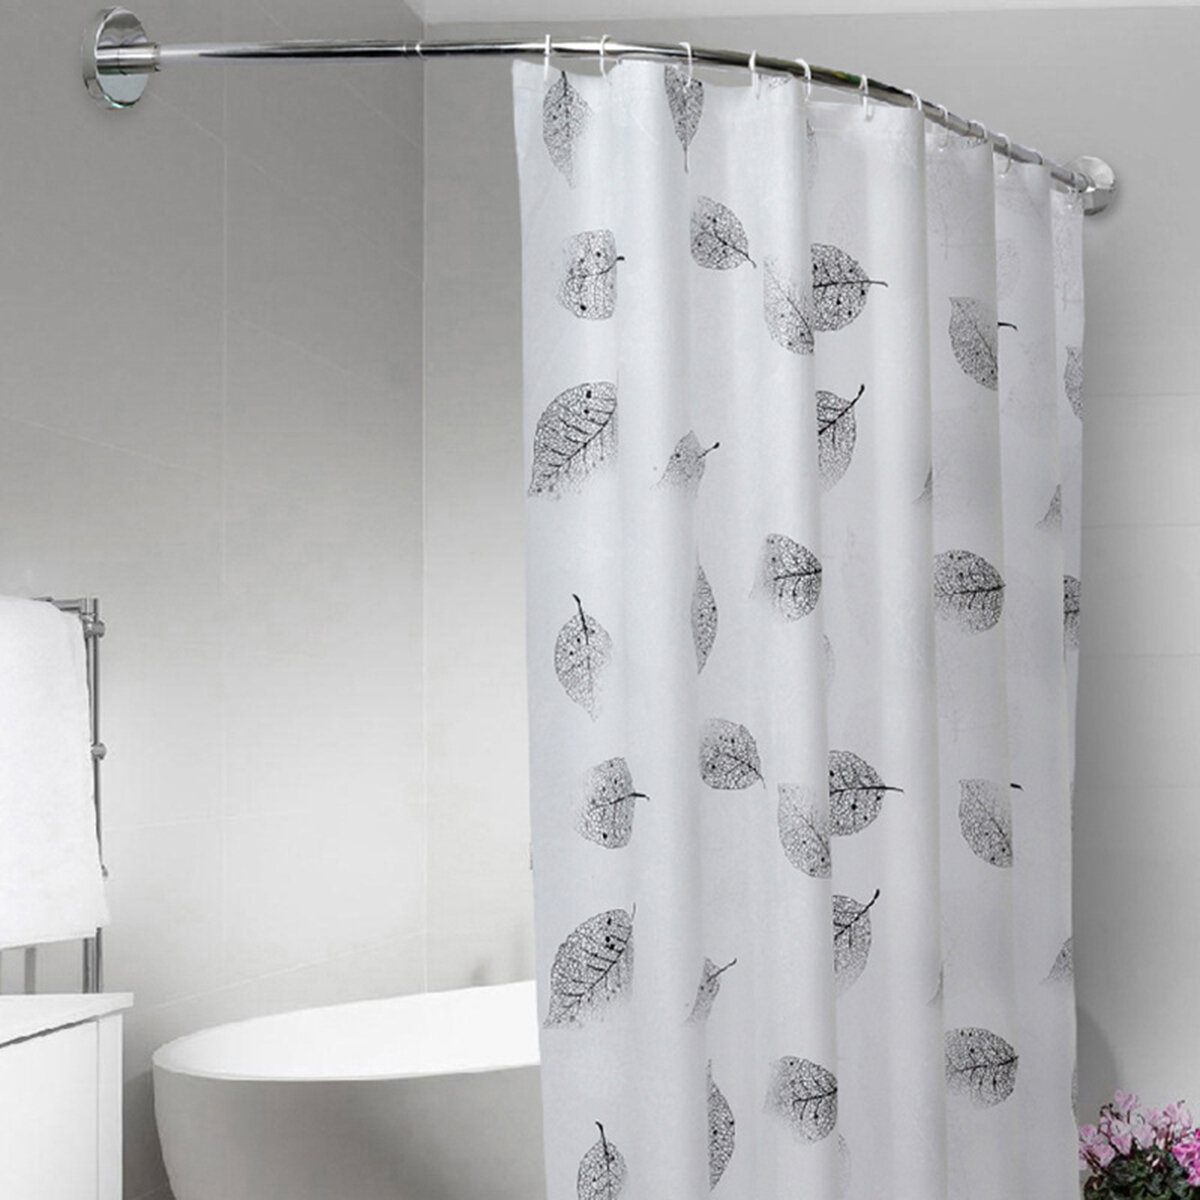 Stainless Steel Adjustable Curved Shower Curtain Rod Bathroom Bars Rail Rod COD